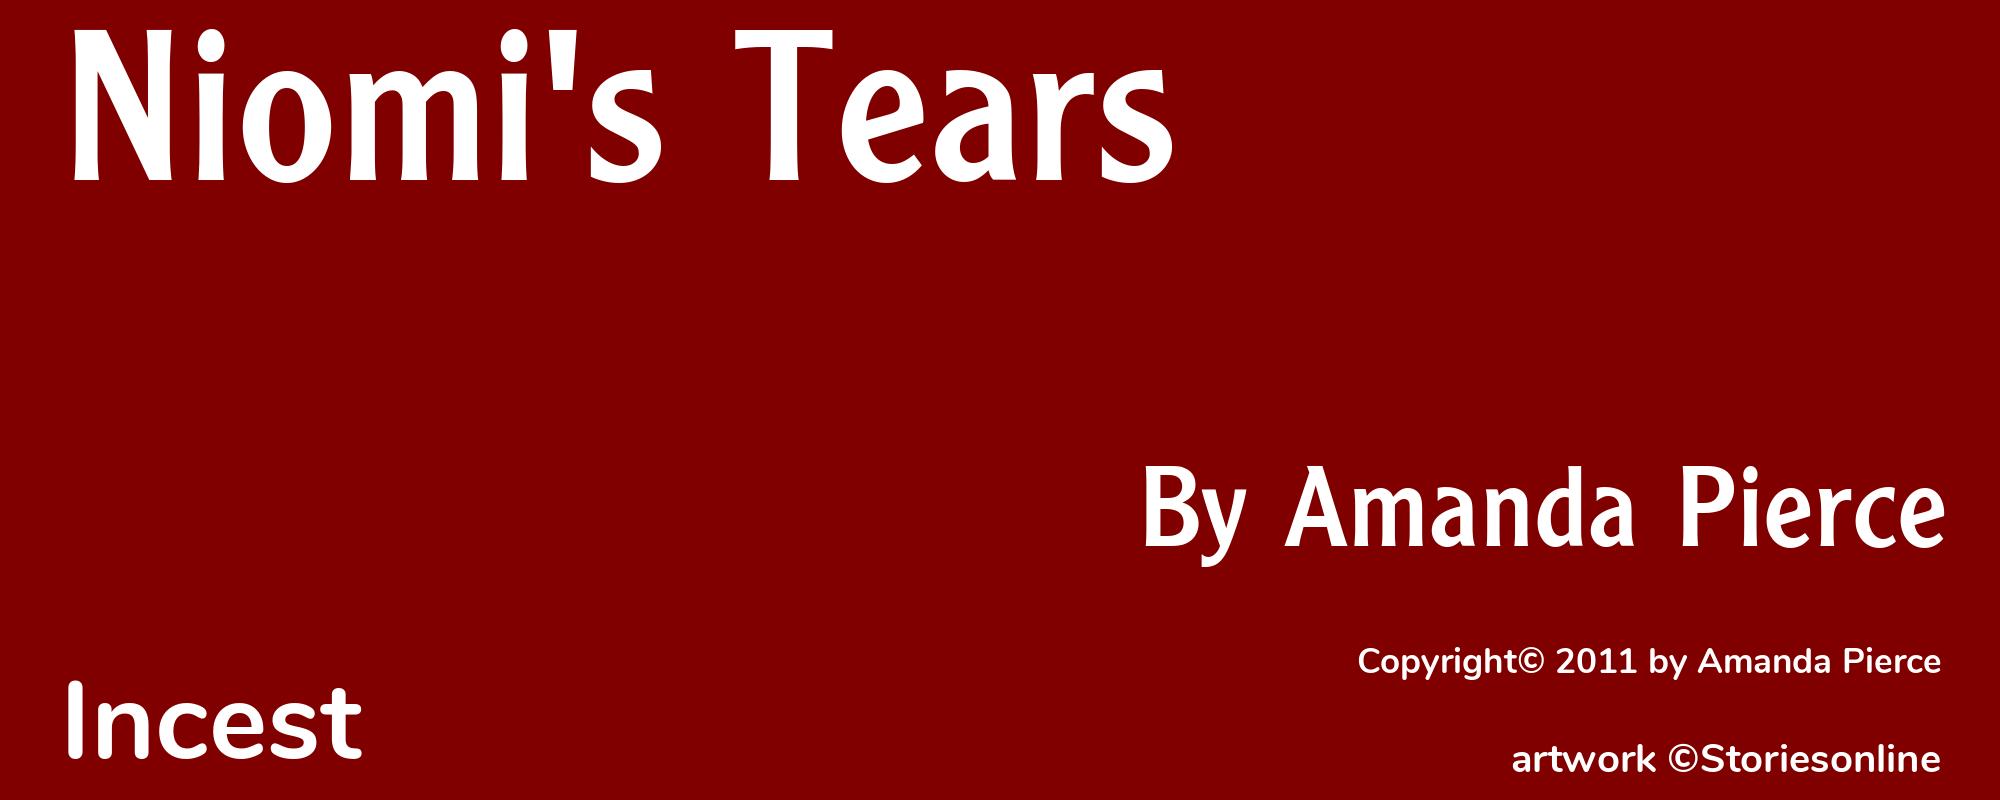 Niomi's Tears - Cover